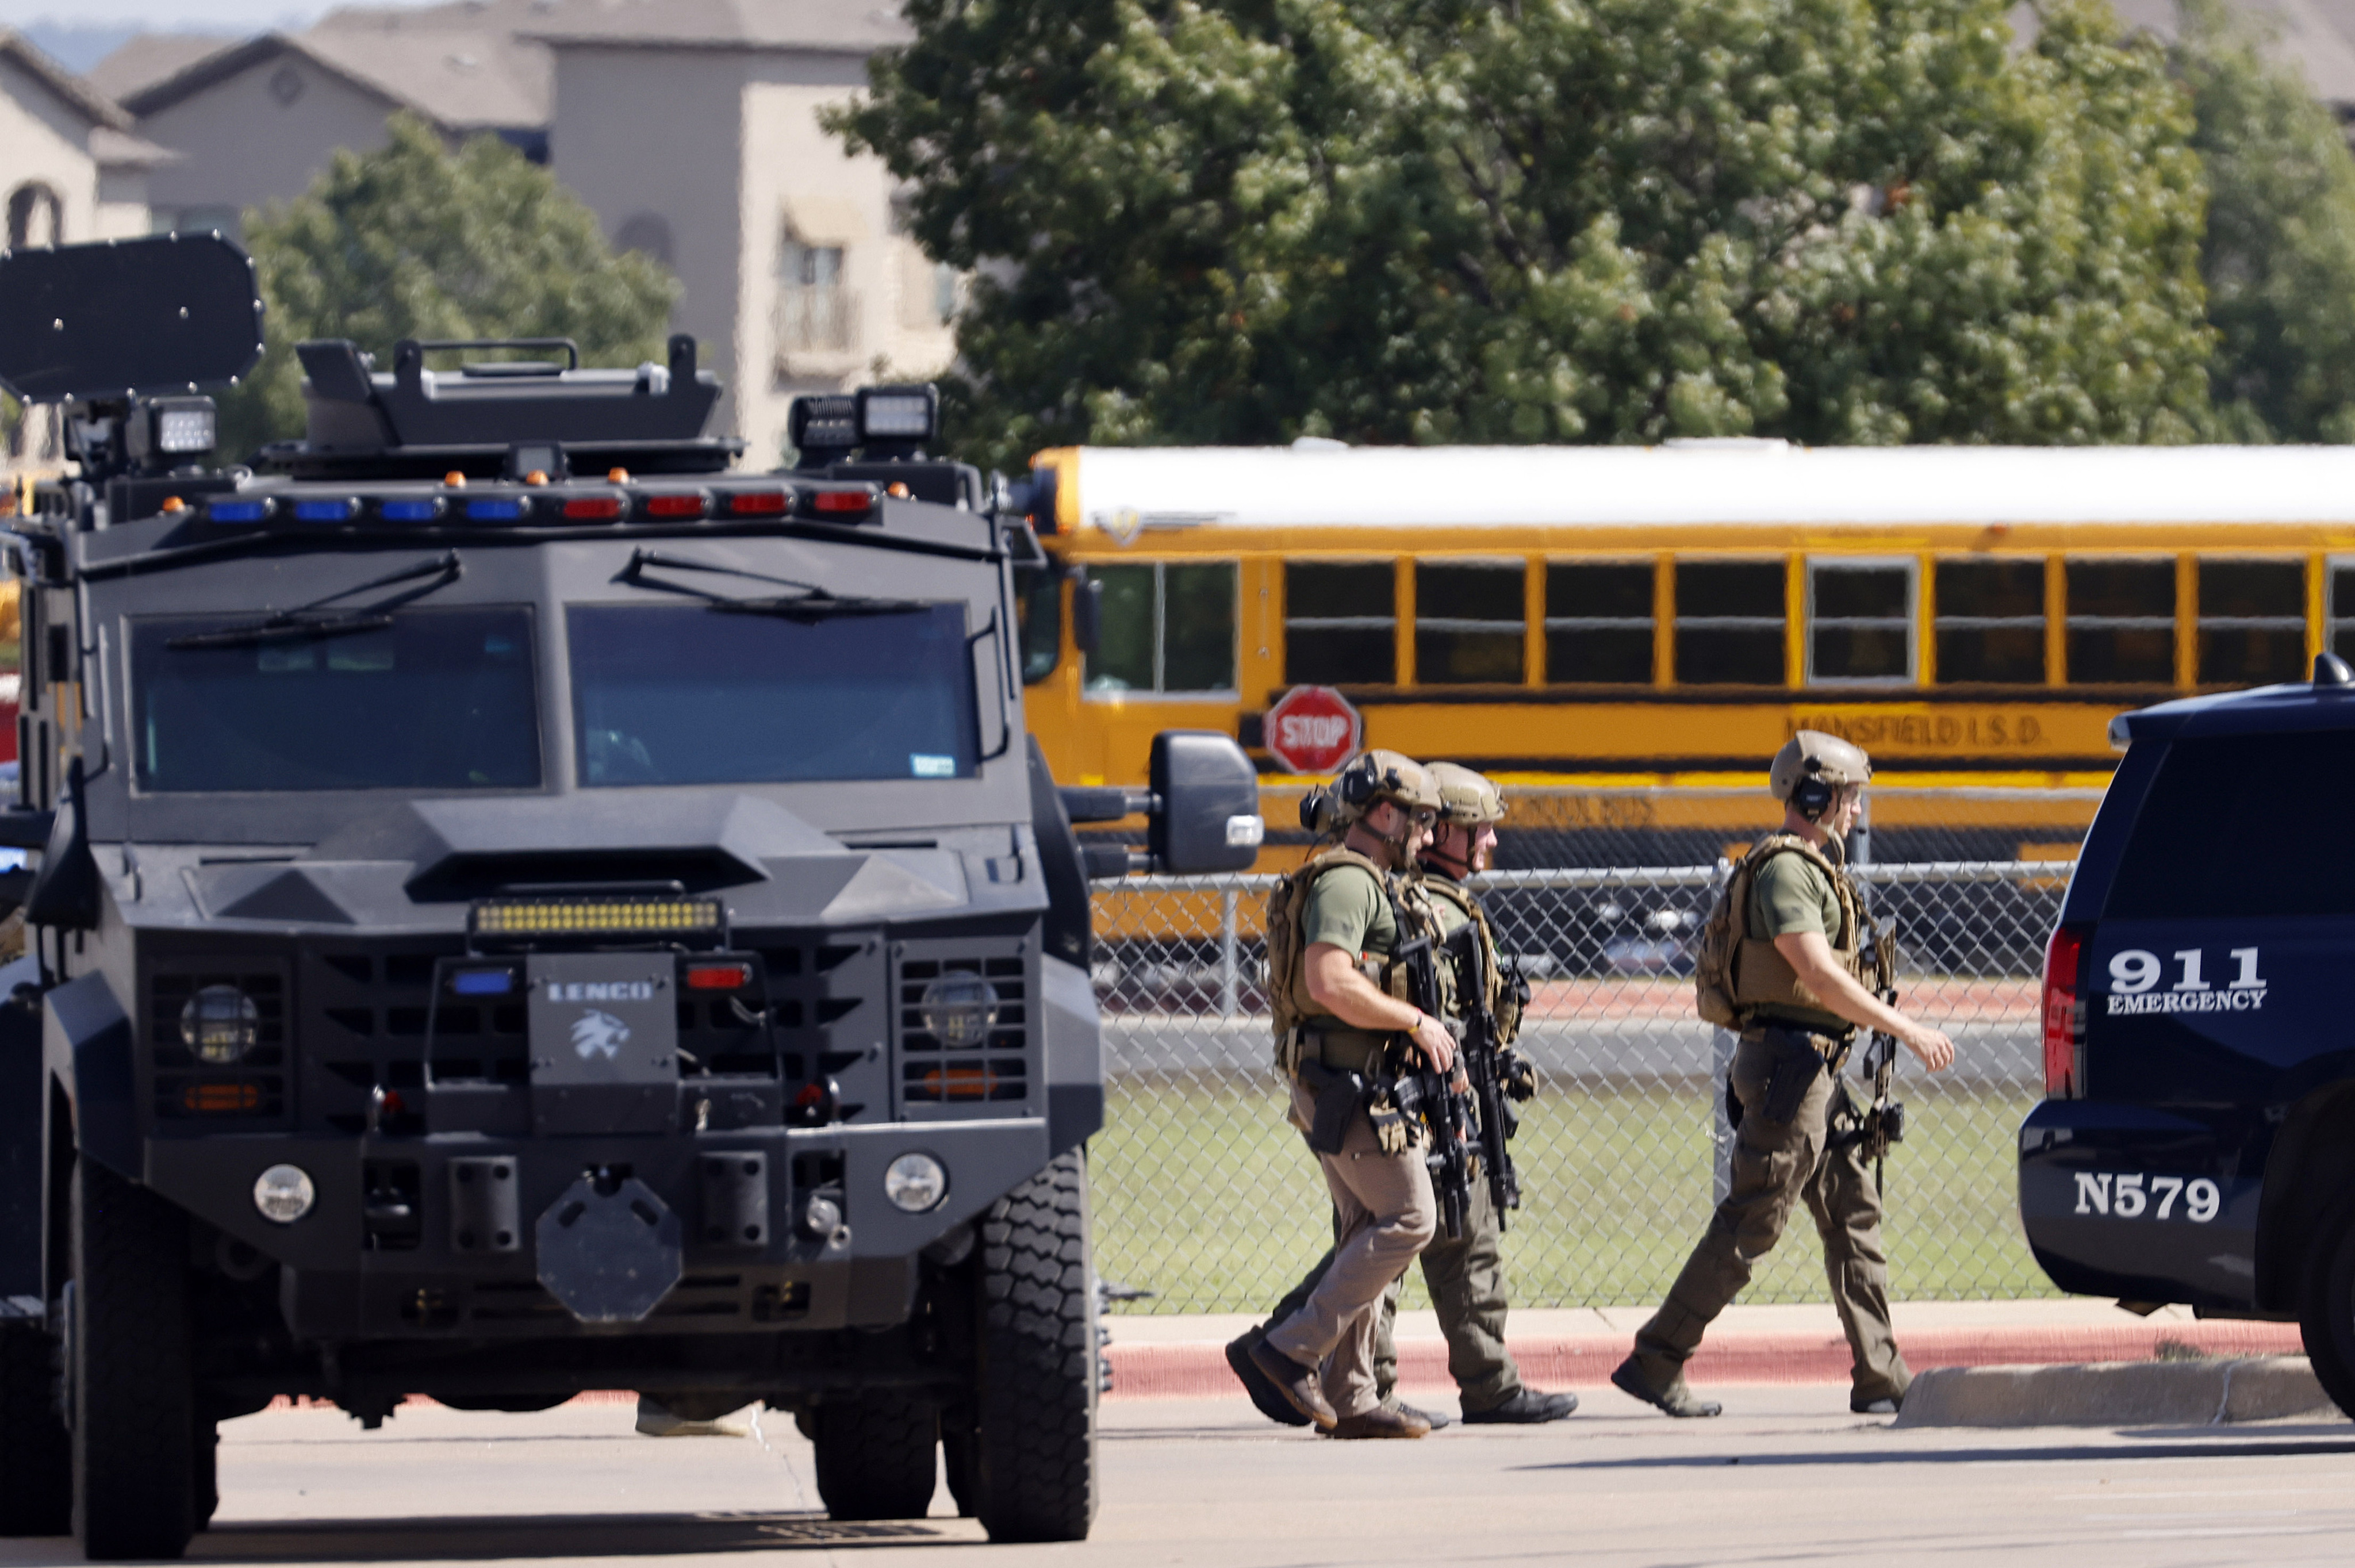 Records Identify Teacher As Victim In Arlington School Shooting